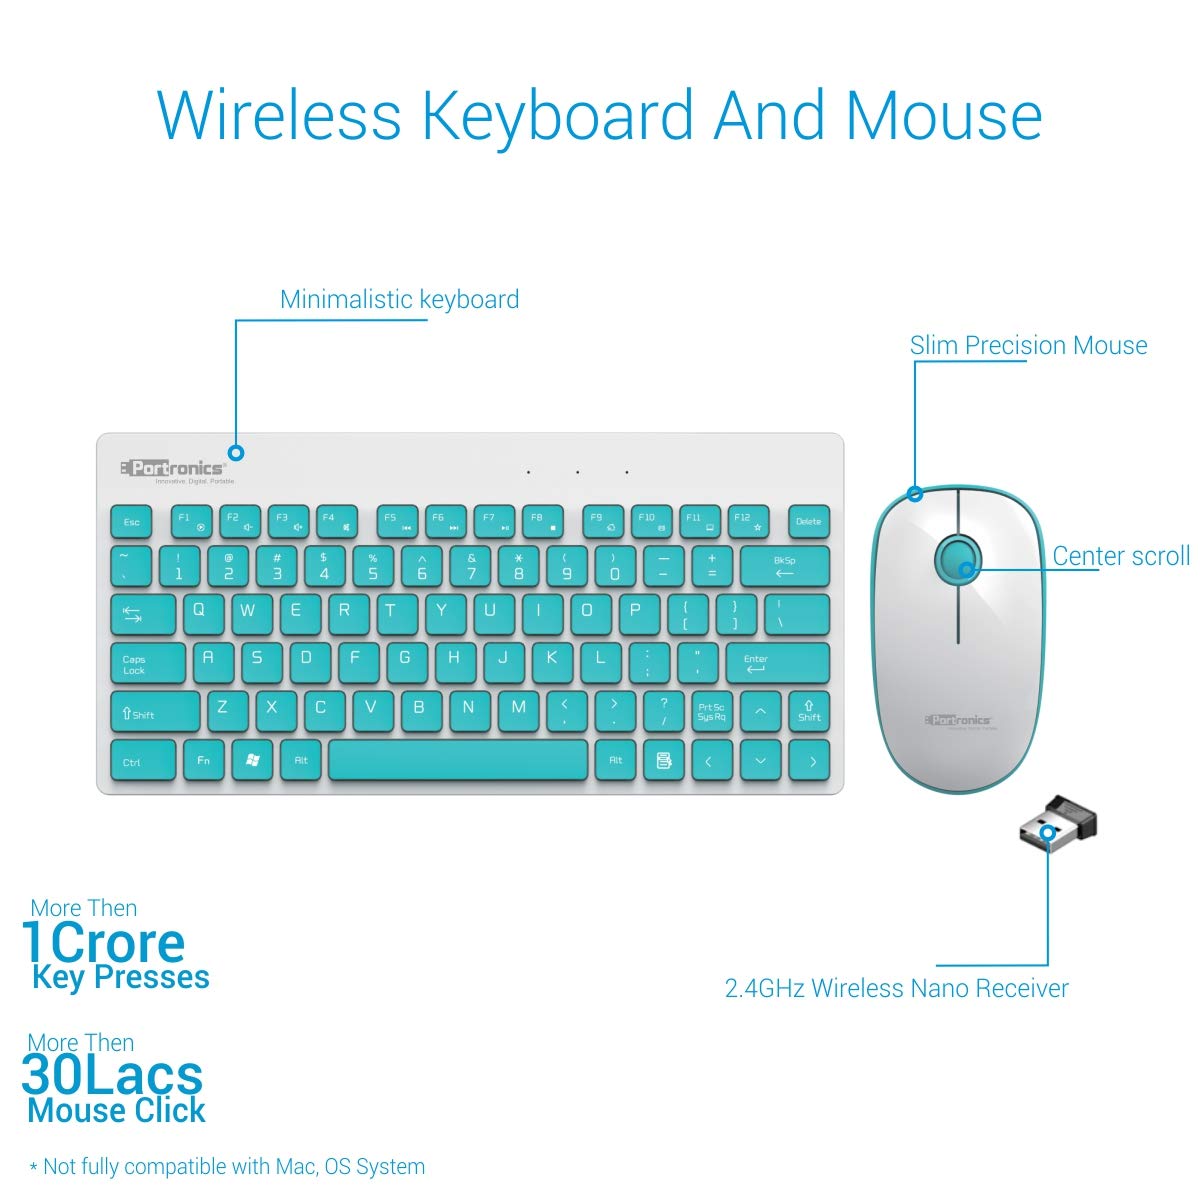 Portronics Key2-A Combo Wireless Keyboard and 1500DPI Optical Mouse Combo - White